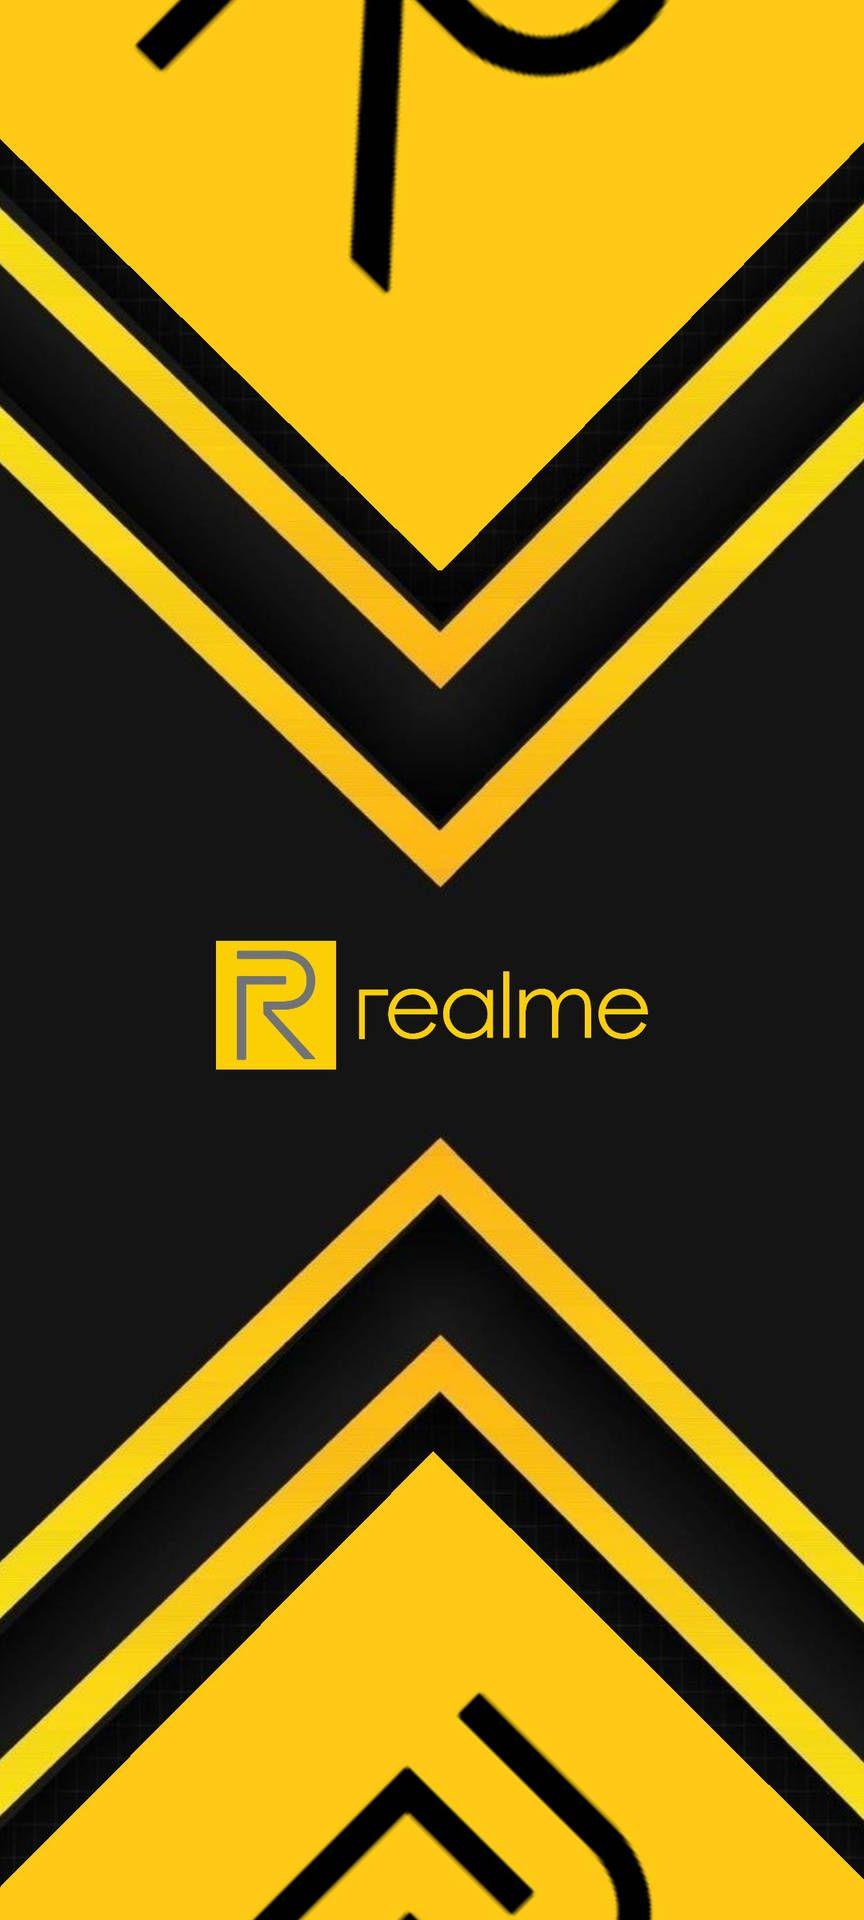 realme Logo - Download Realme Logo Two Points